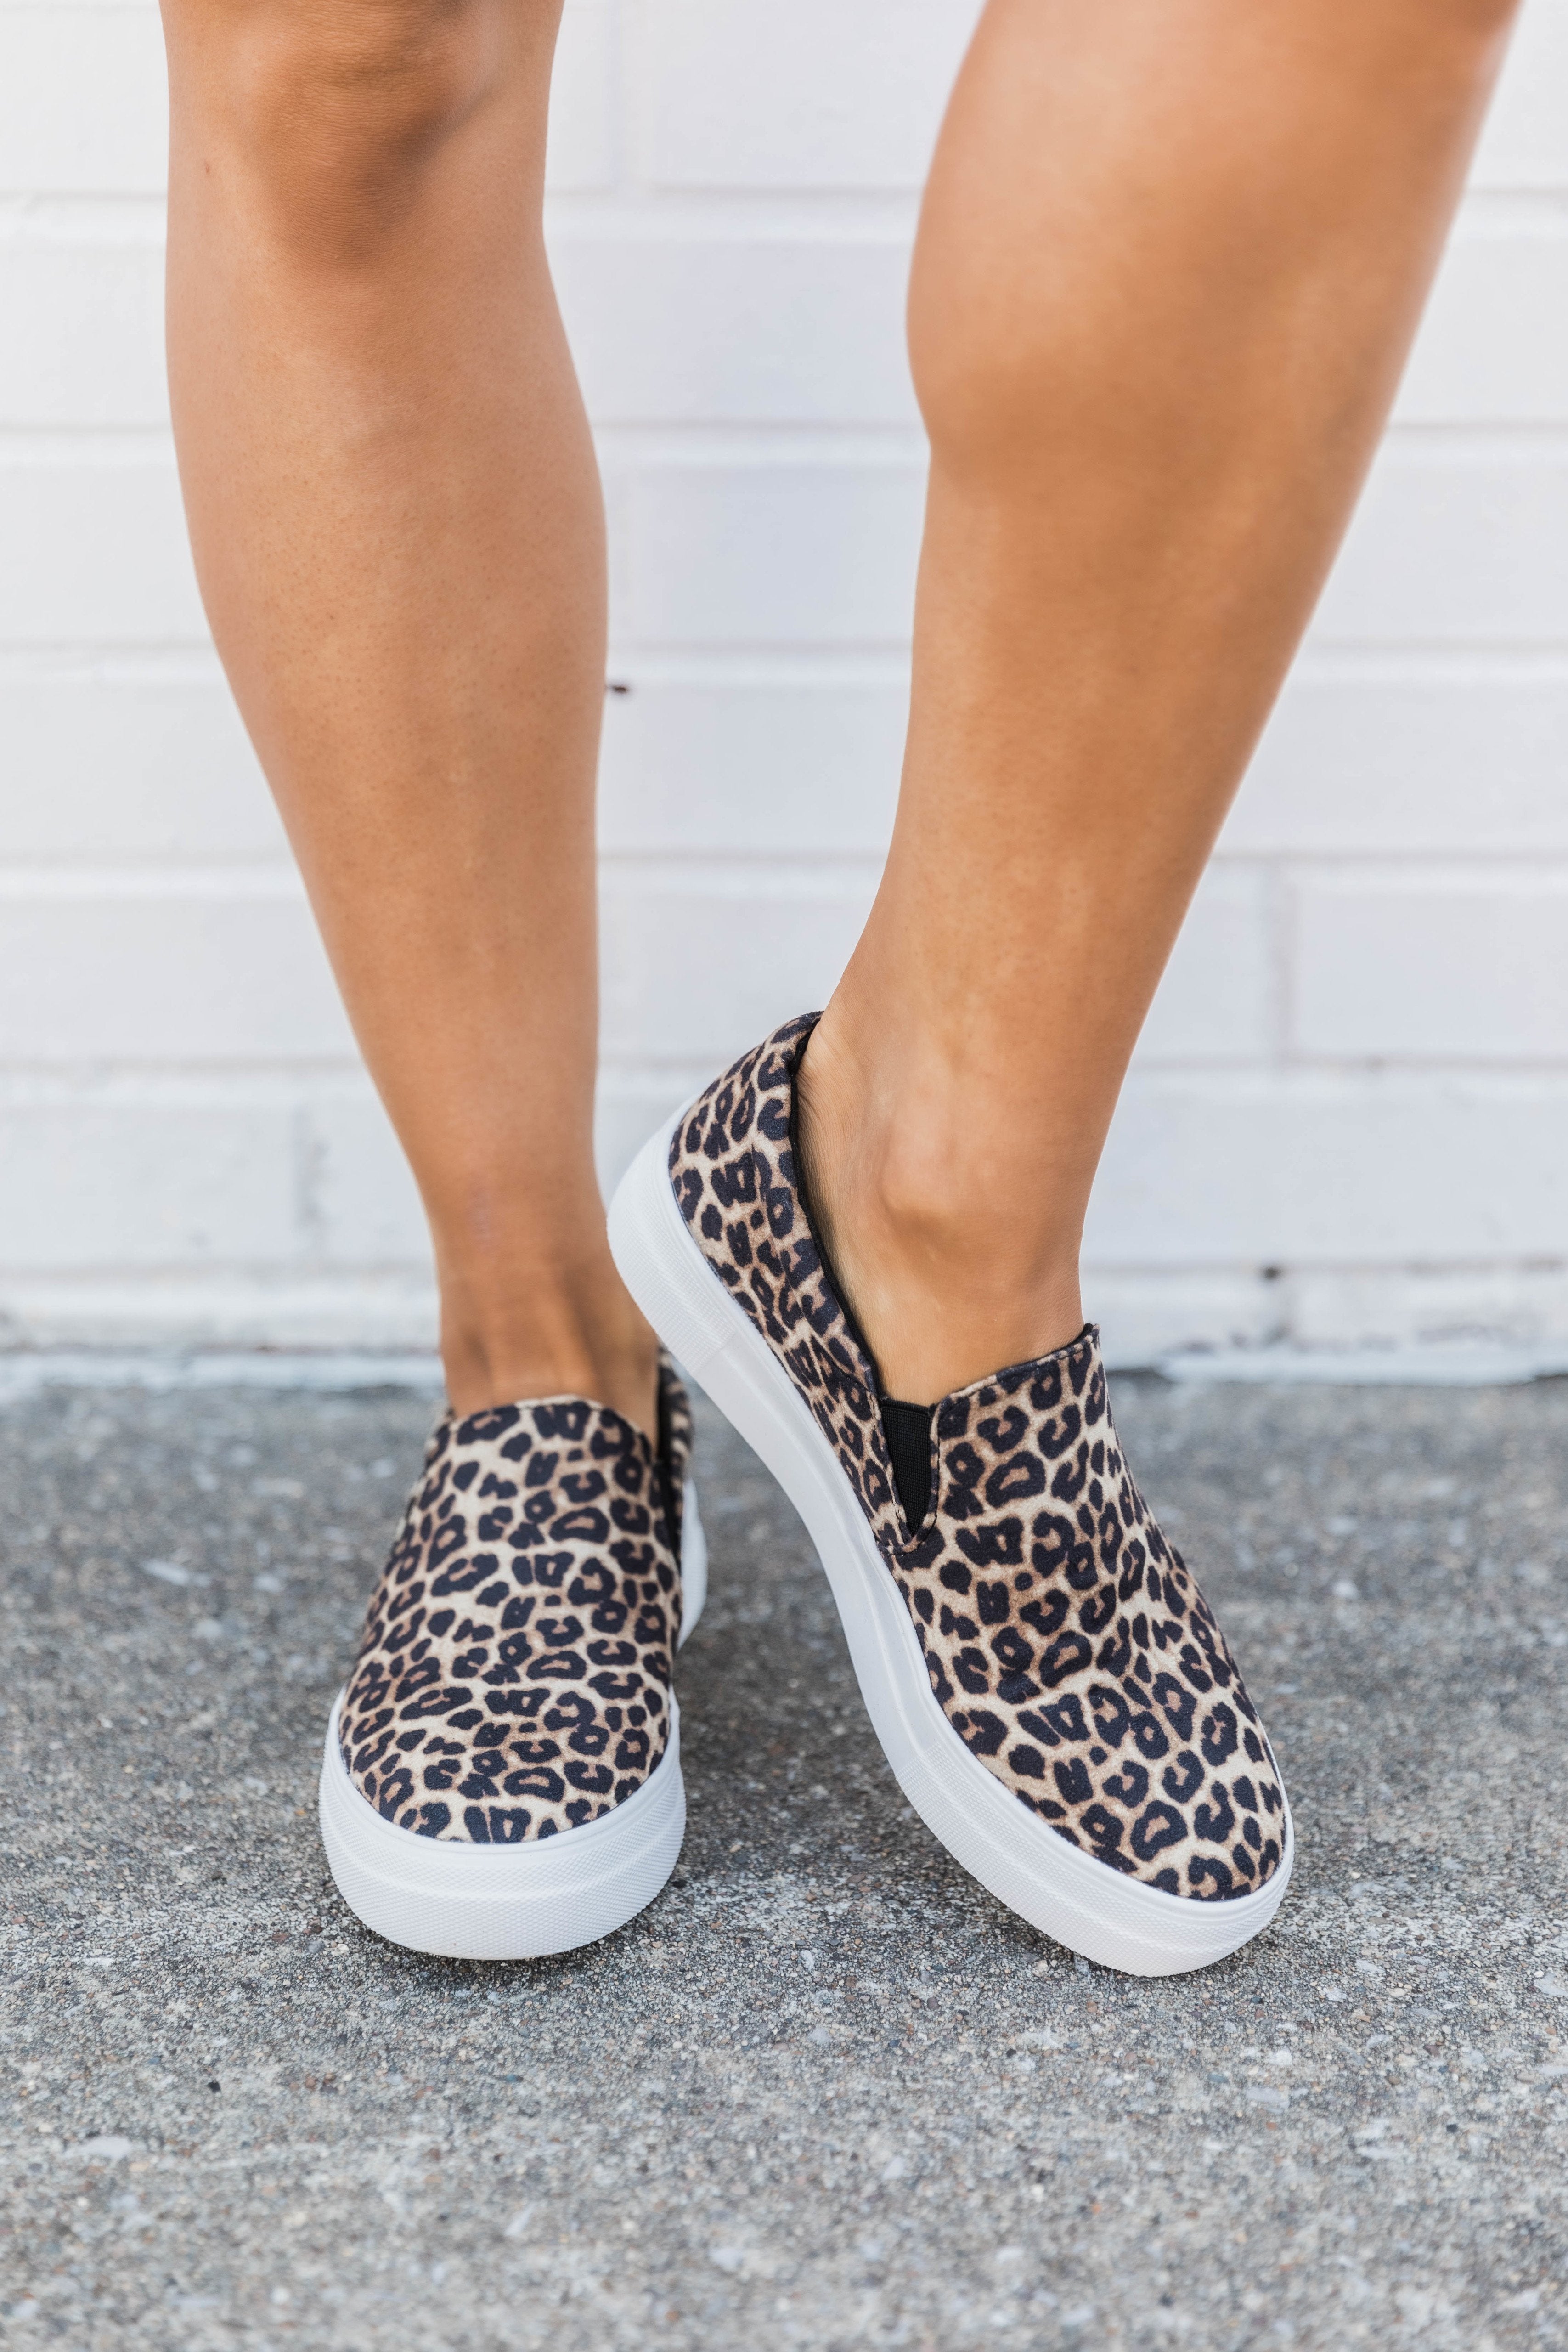 The Abigail Cheetah Sneakers